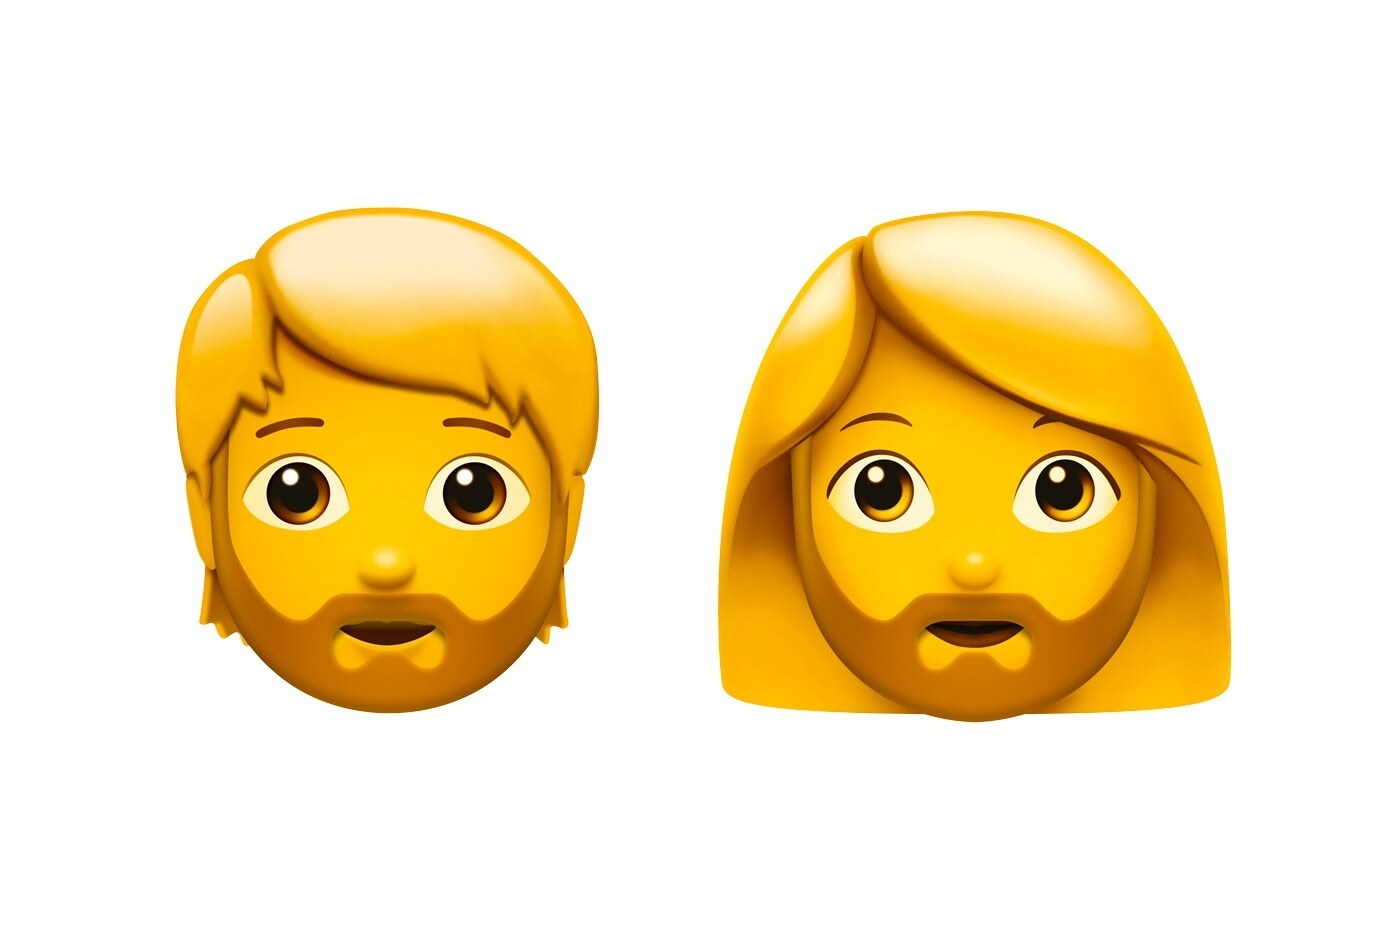 iOS 14.5 new emojis